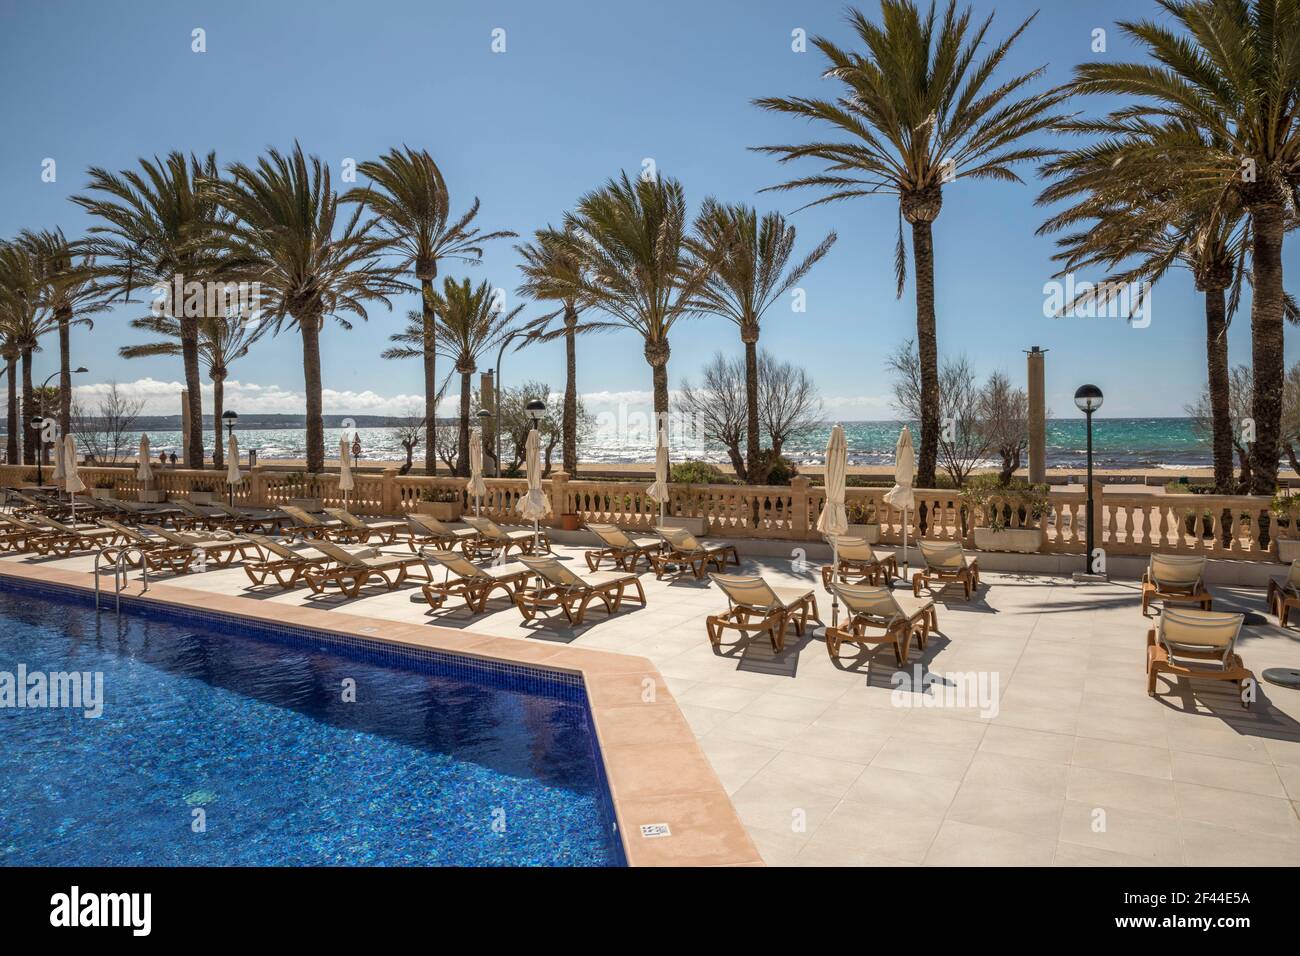 Berlin, Mallorca, Spanien. März 2021, 17th. Meerblick aus einem geschlossenen Hotel mit leerem Pool und Sonnenliegen neben der Promenade an der Playa de Palma in Mmalorca. Quelle: John-Patrick Morarescu/ZUMA Wire/Alamy Live News Stockfoto